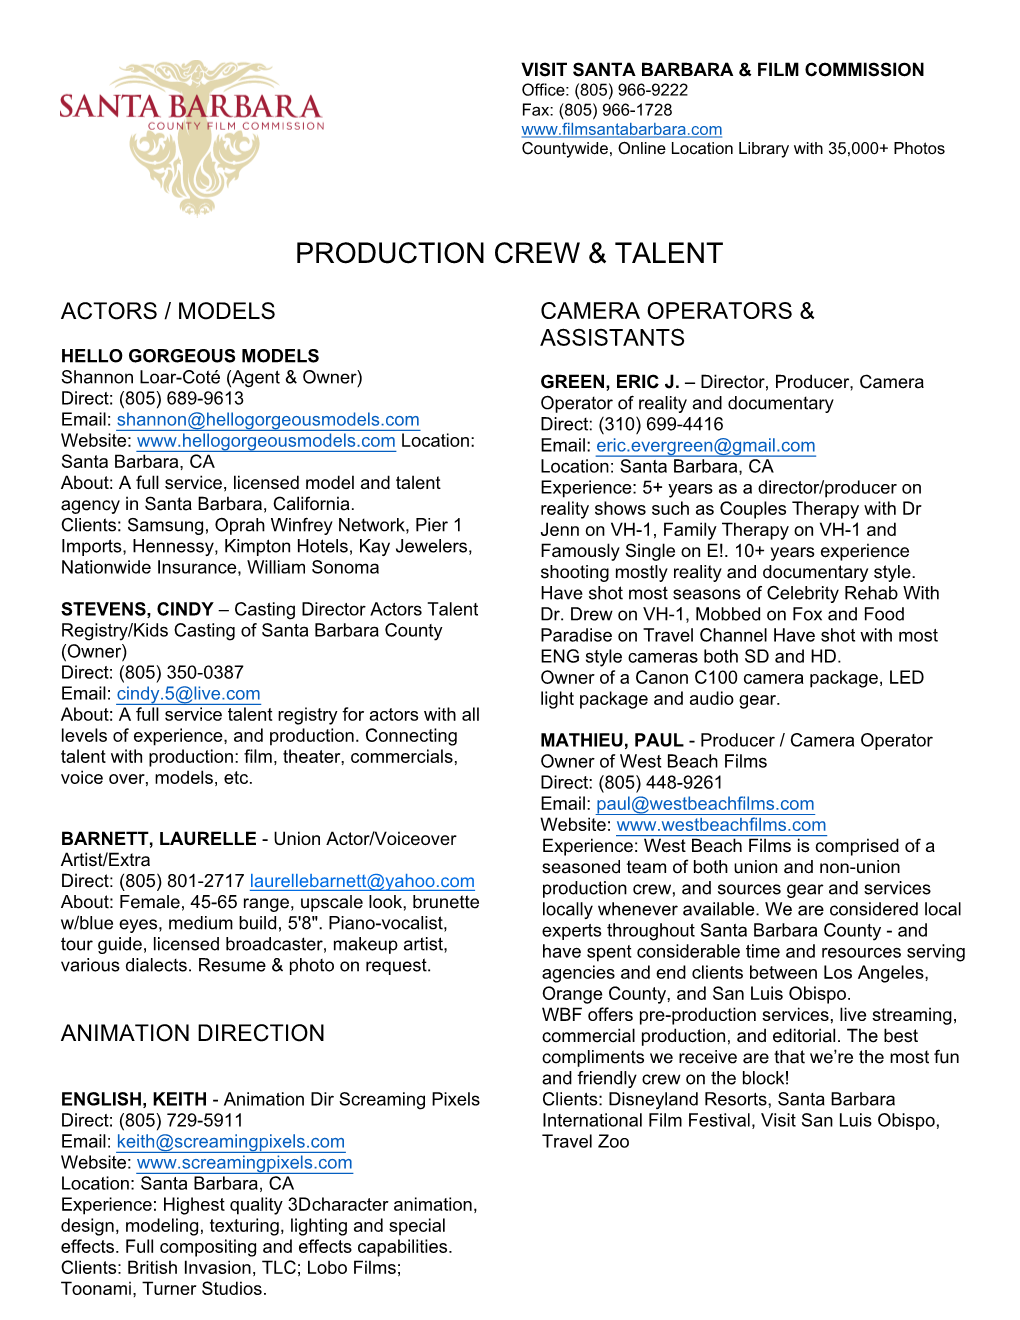 Production Crew & Talent